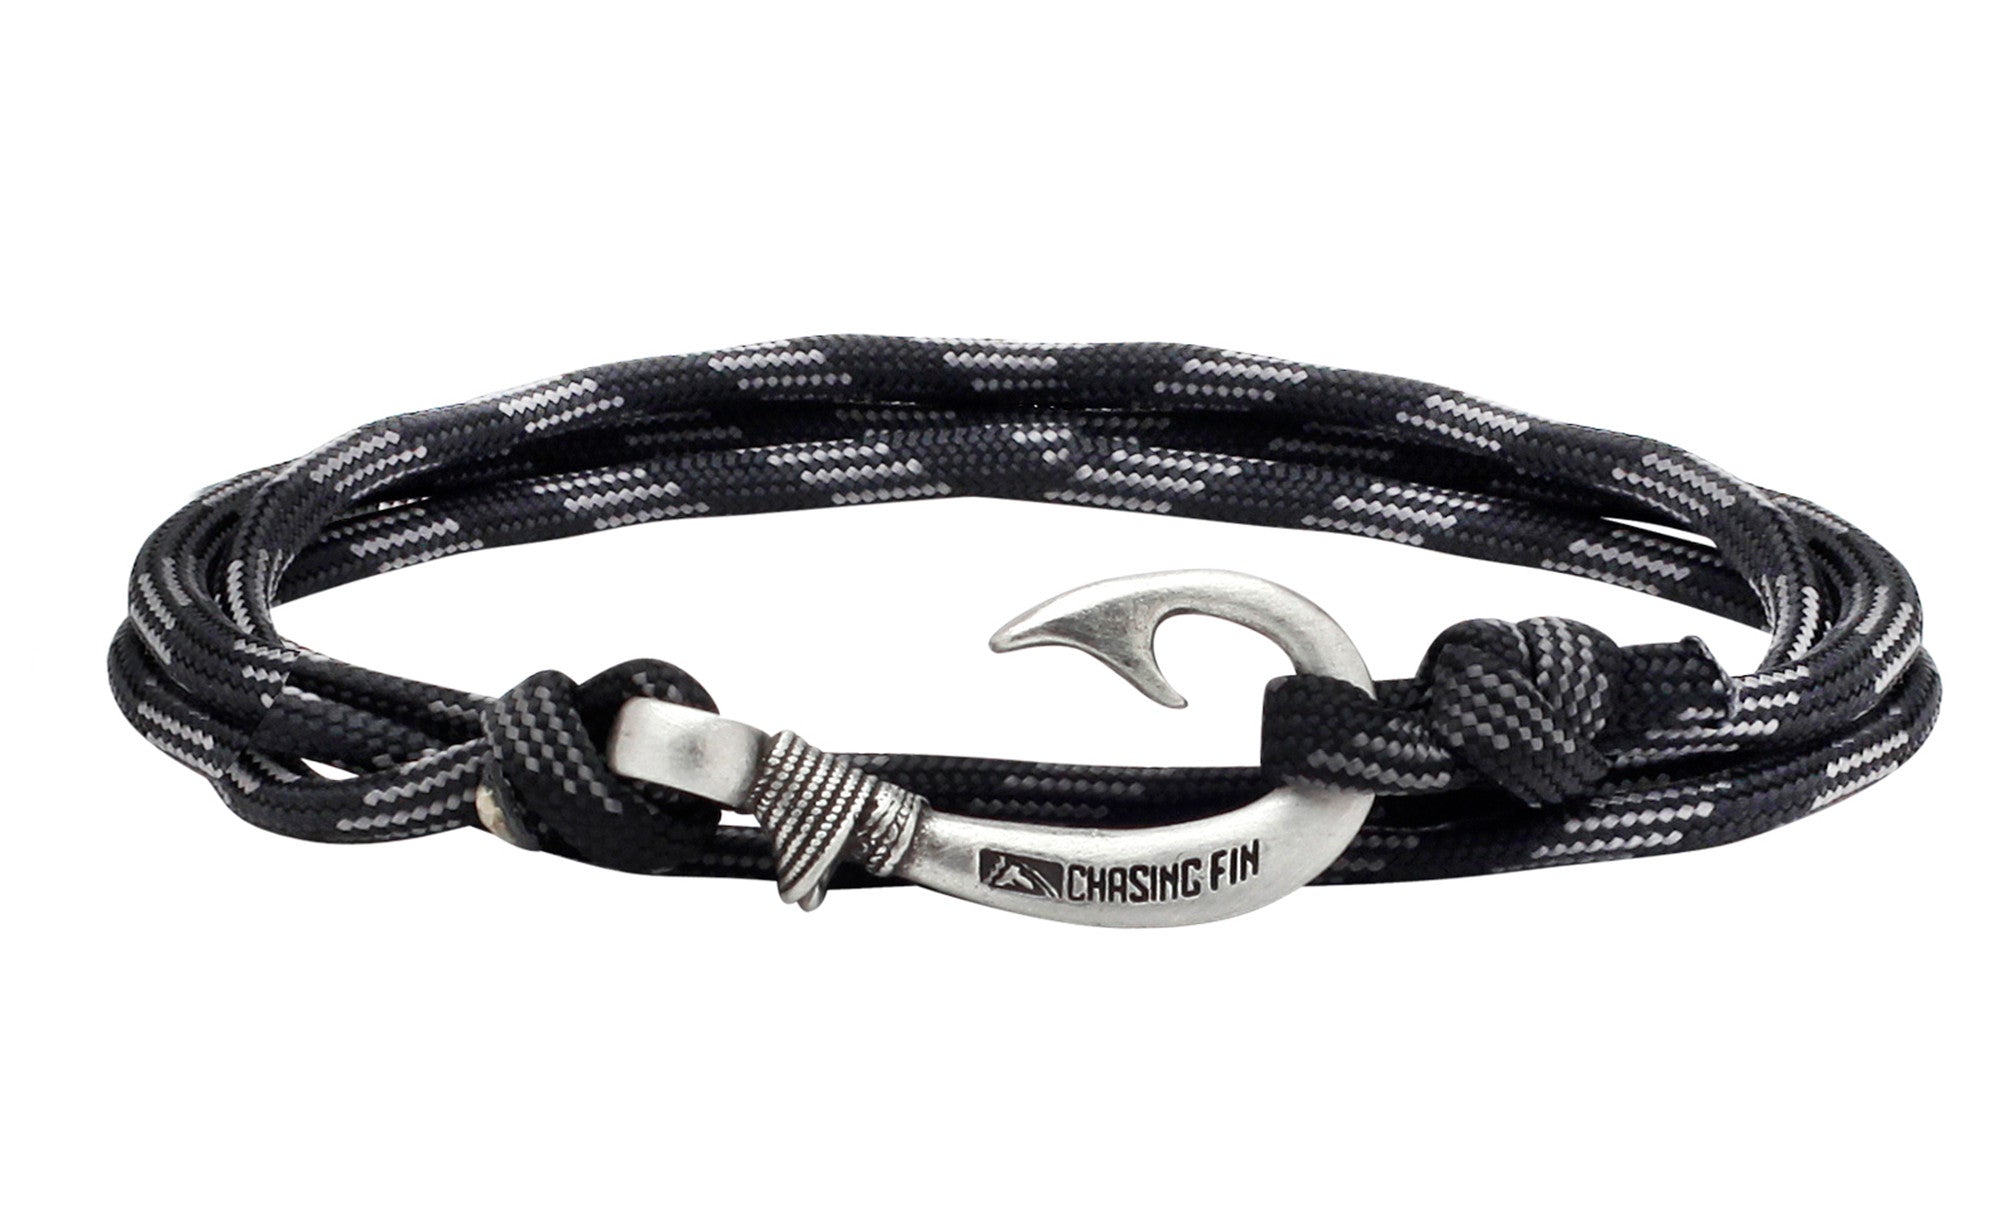 New Cobra Braid Fish Hook Bracelet – Fish Hook Bracelets